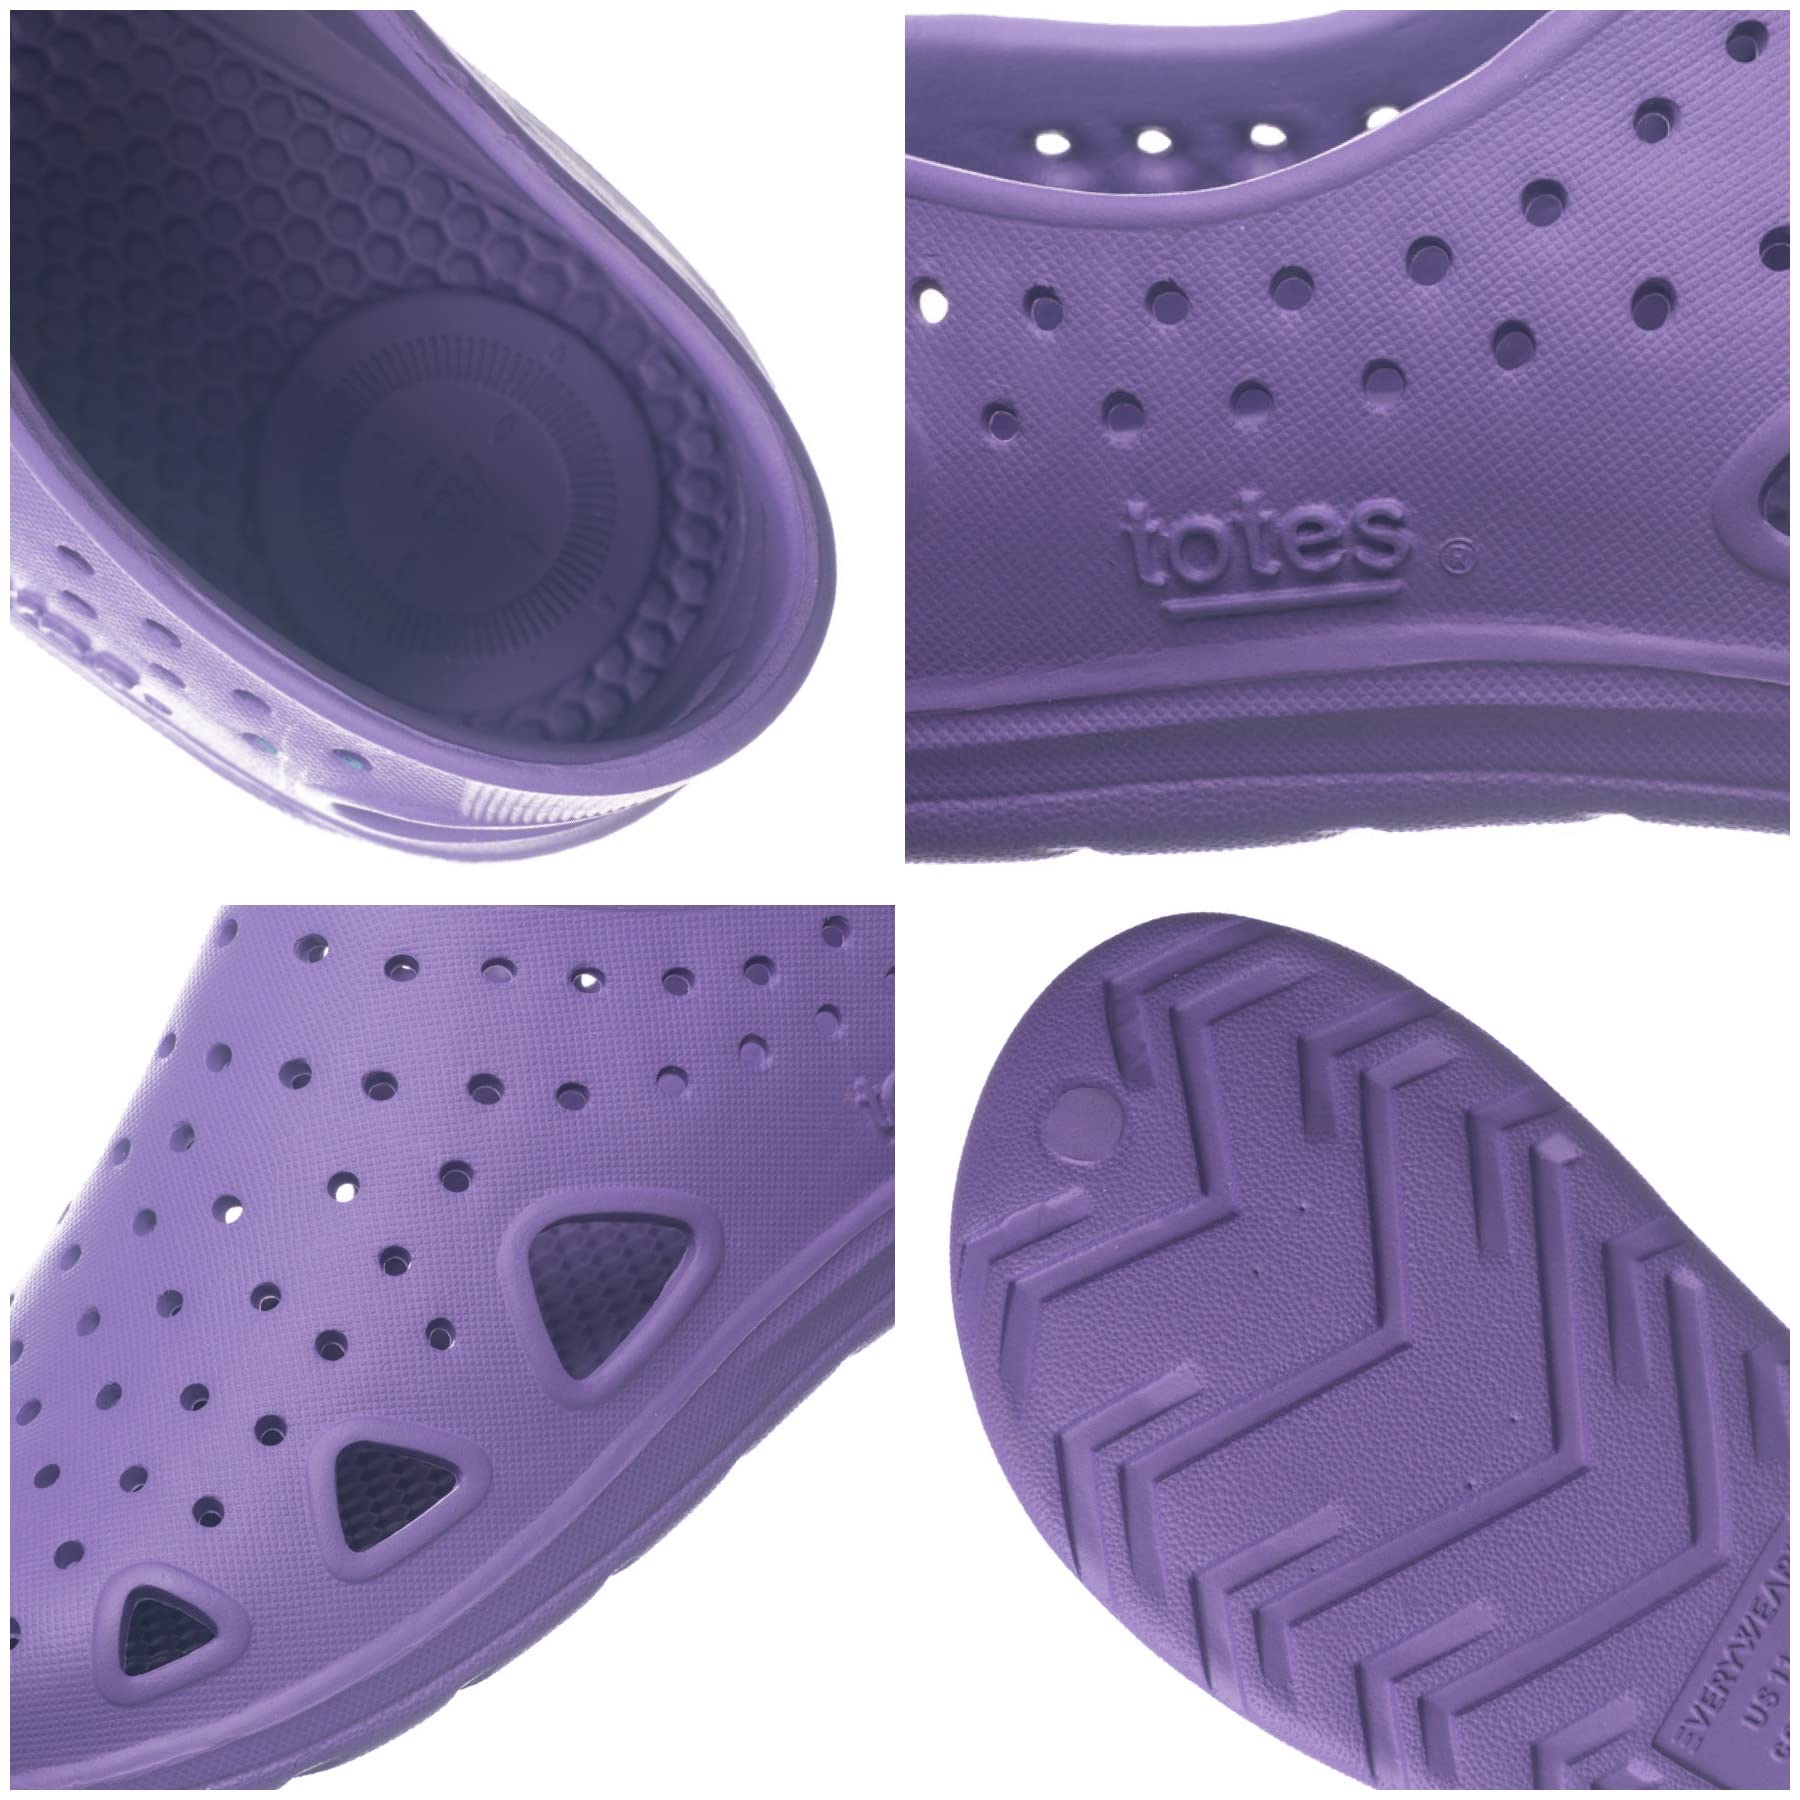 totes Unisex-Child Slip-on Clog Sandals